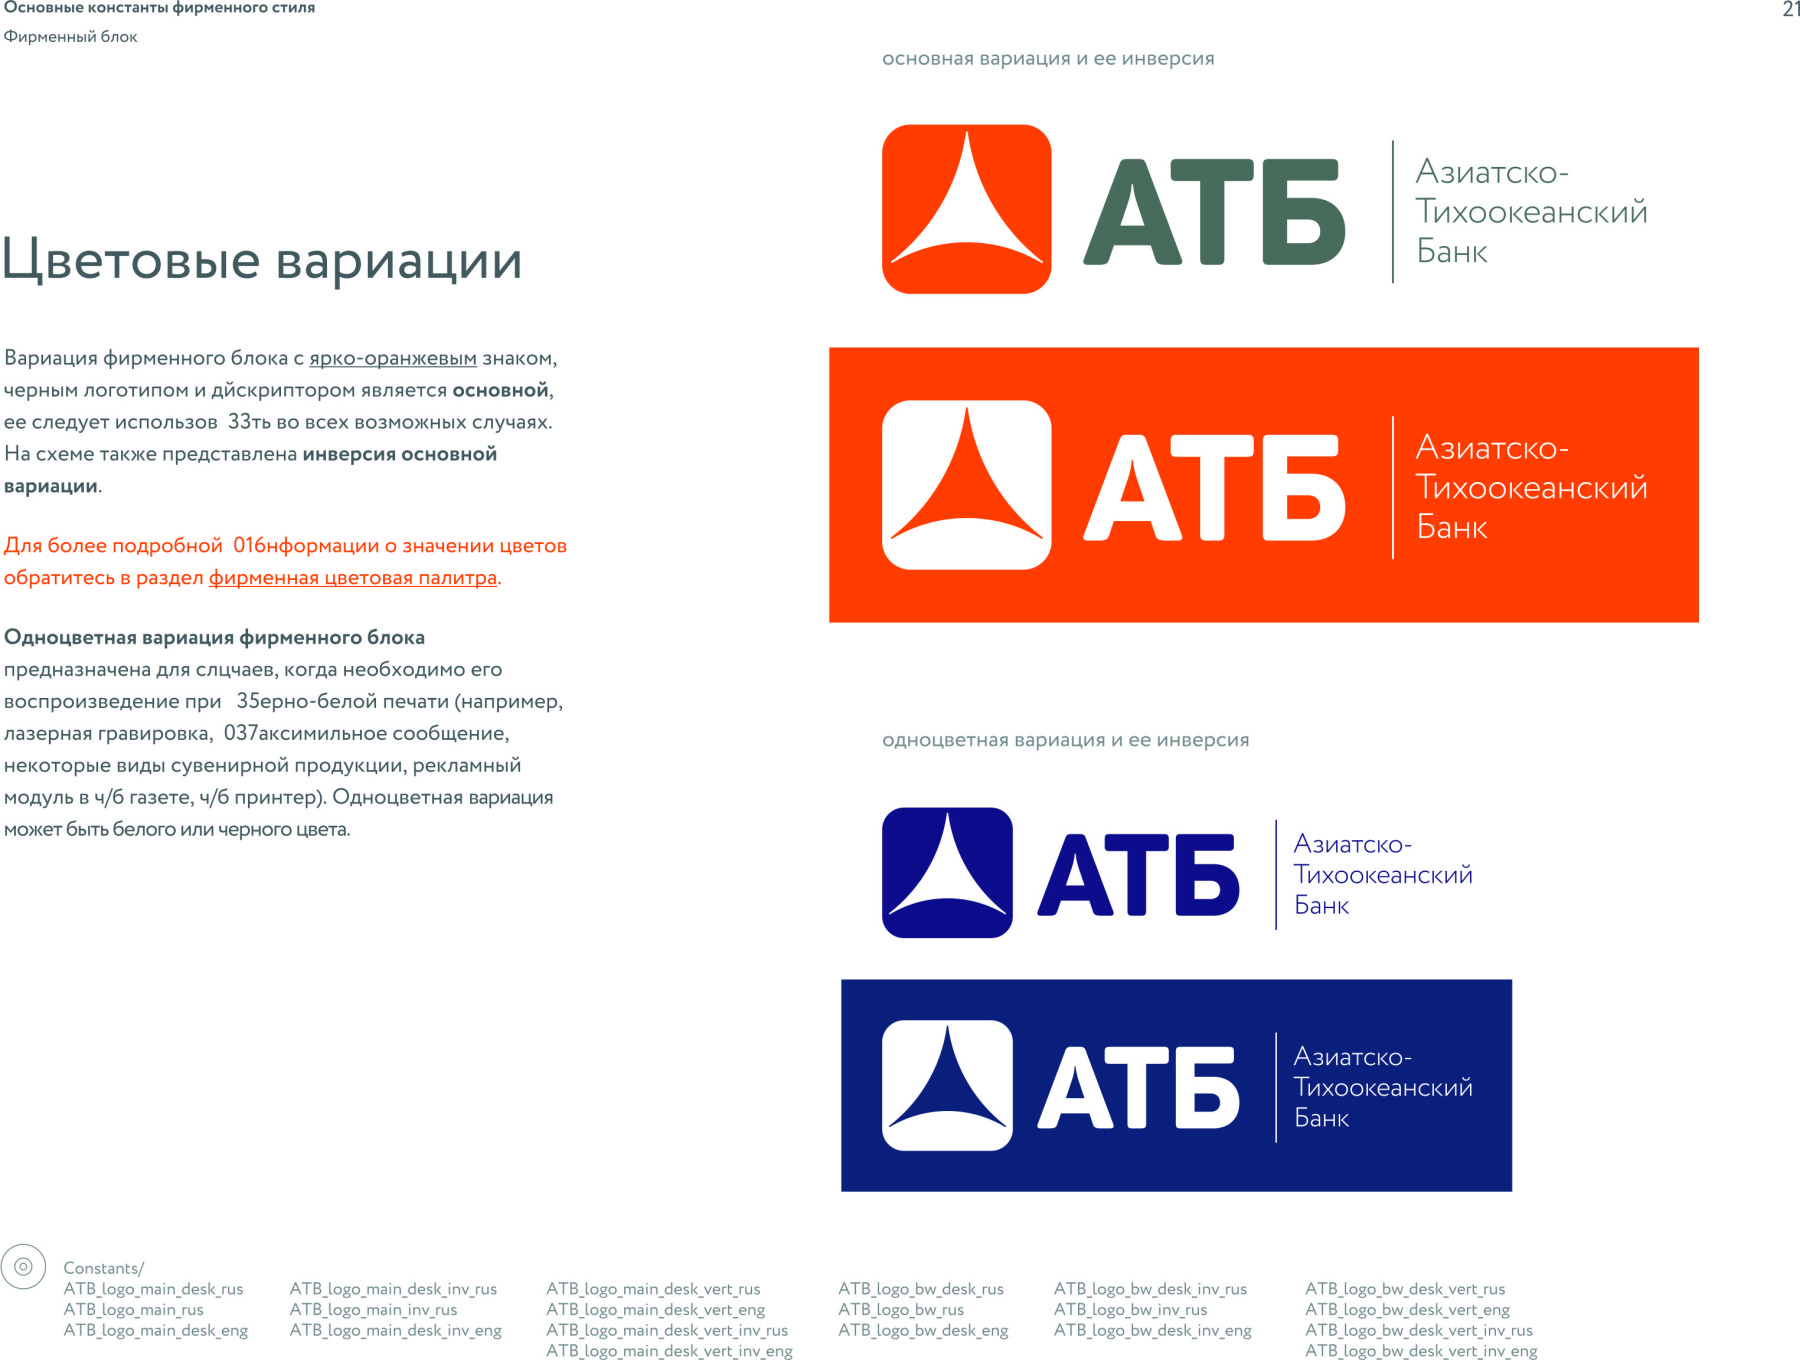 Атб банк в новосибирске. Азиатско-Тихоокеанский банк логотип. АТБ банк.